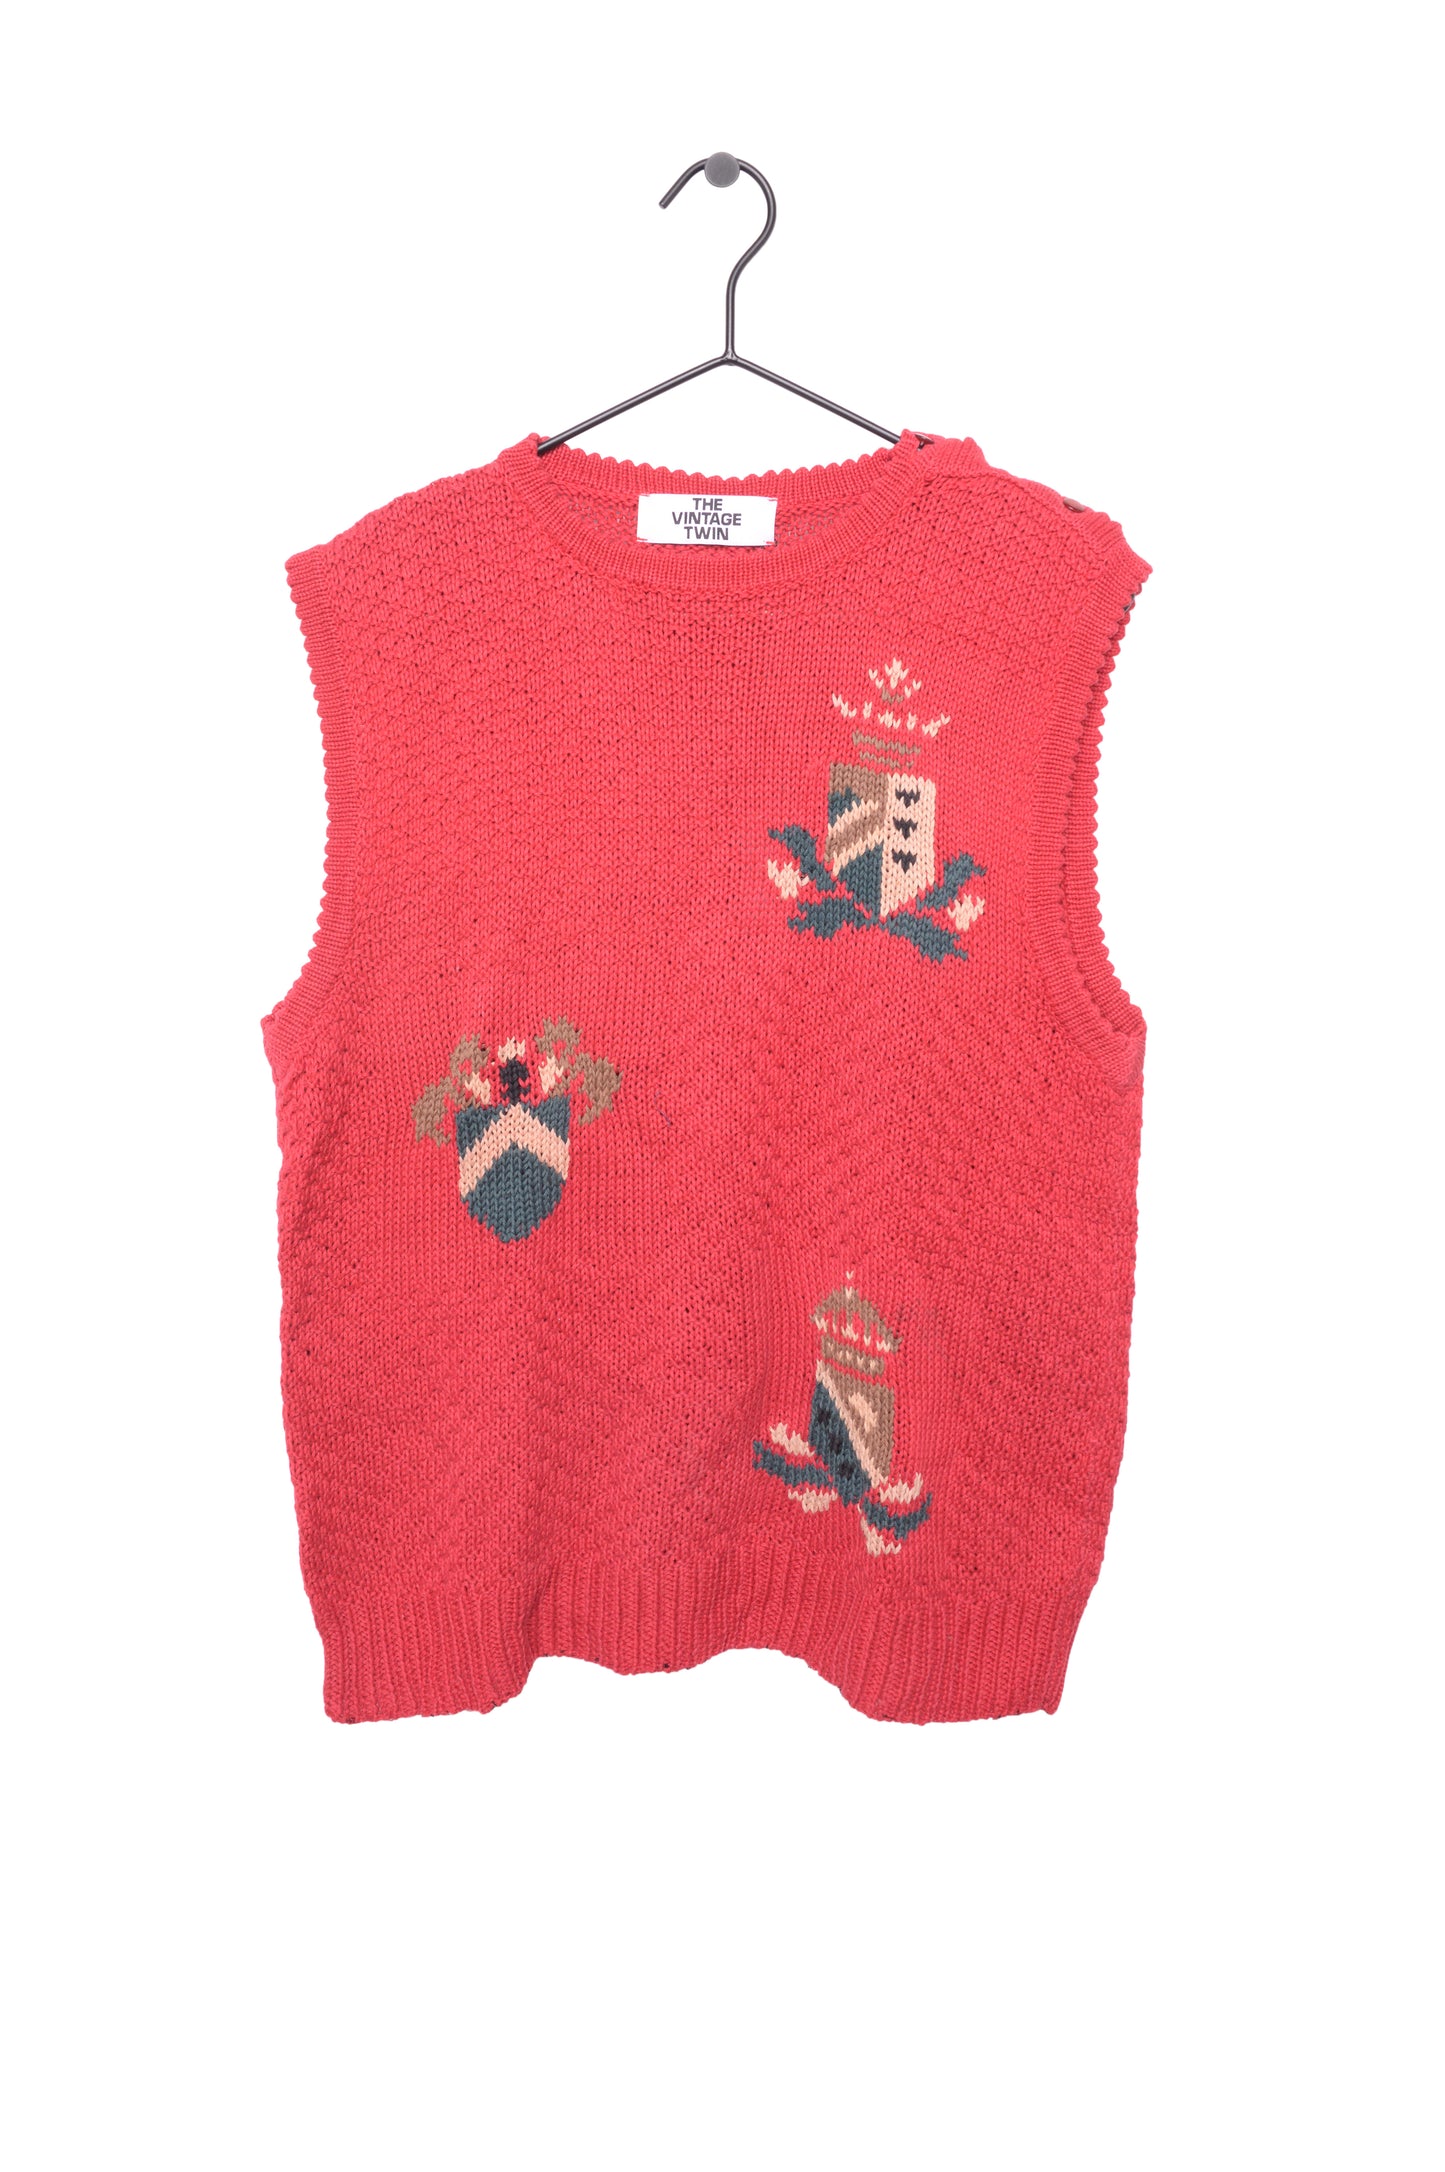 Crests Red Sweater Vest